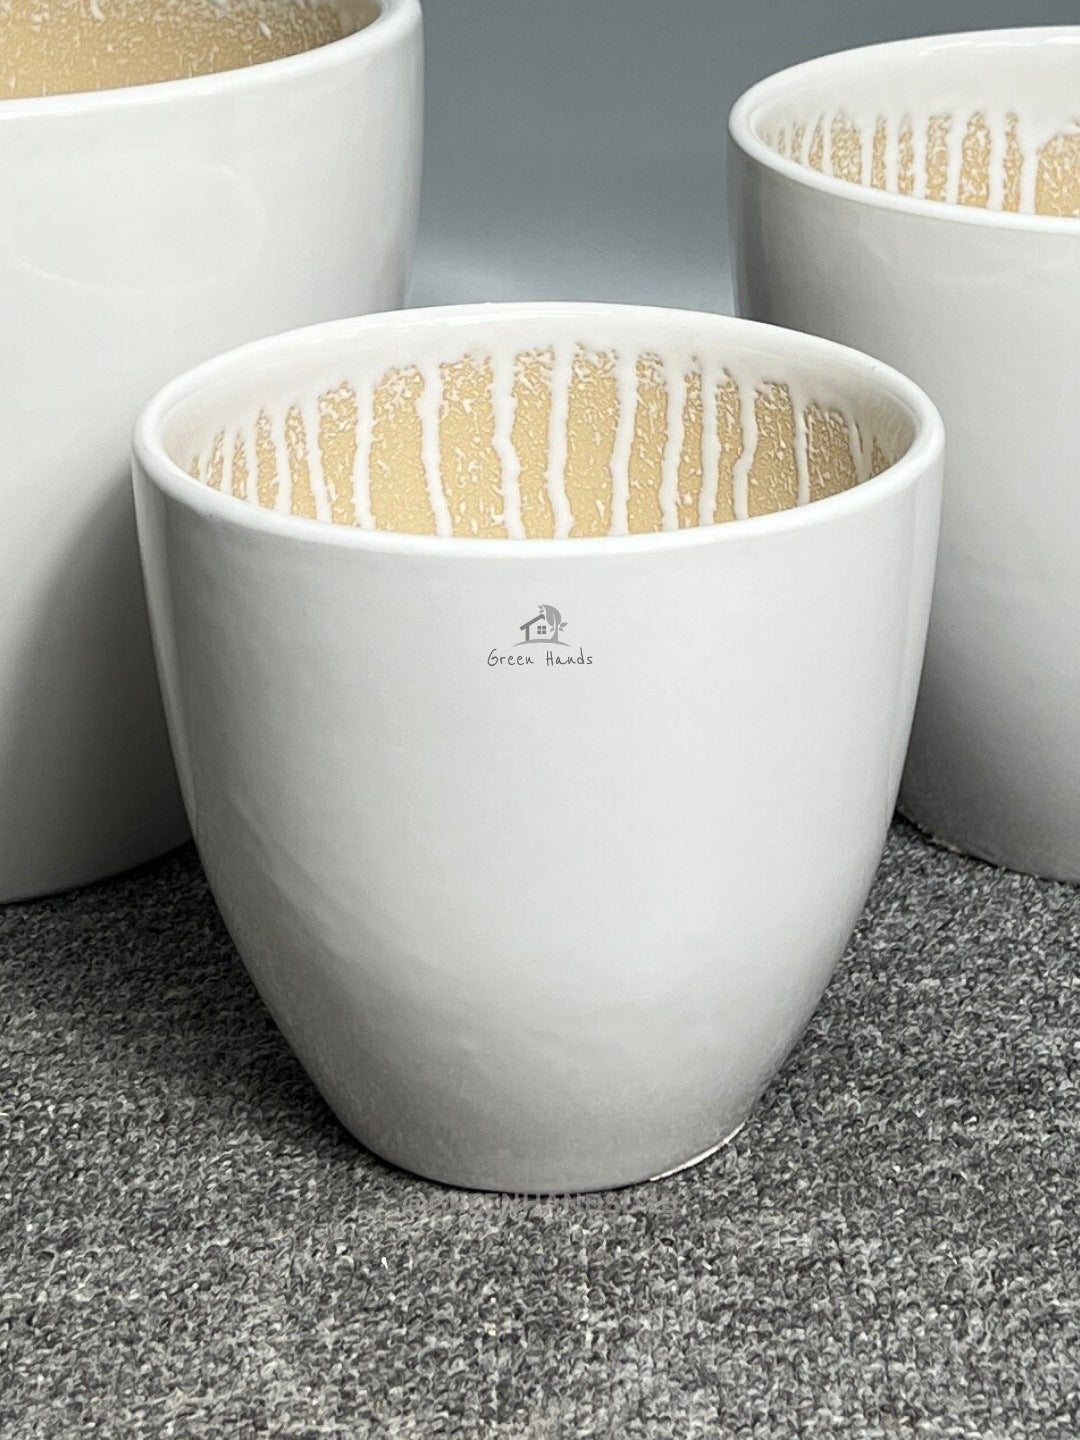 Modern White Ceramic Pots: Sleek Design in UAE